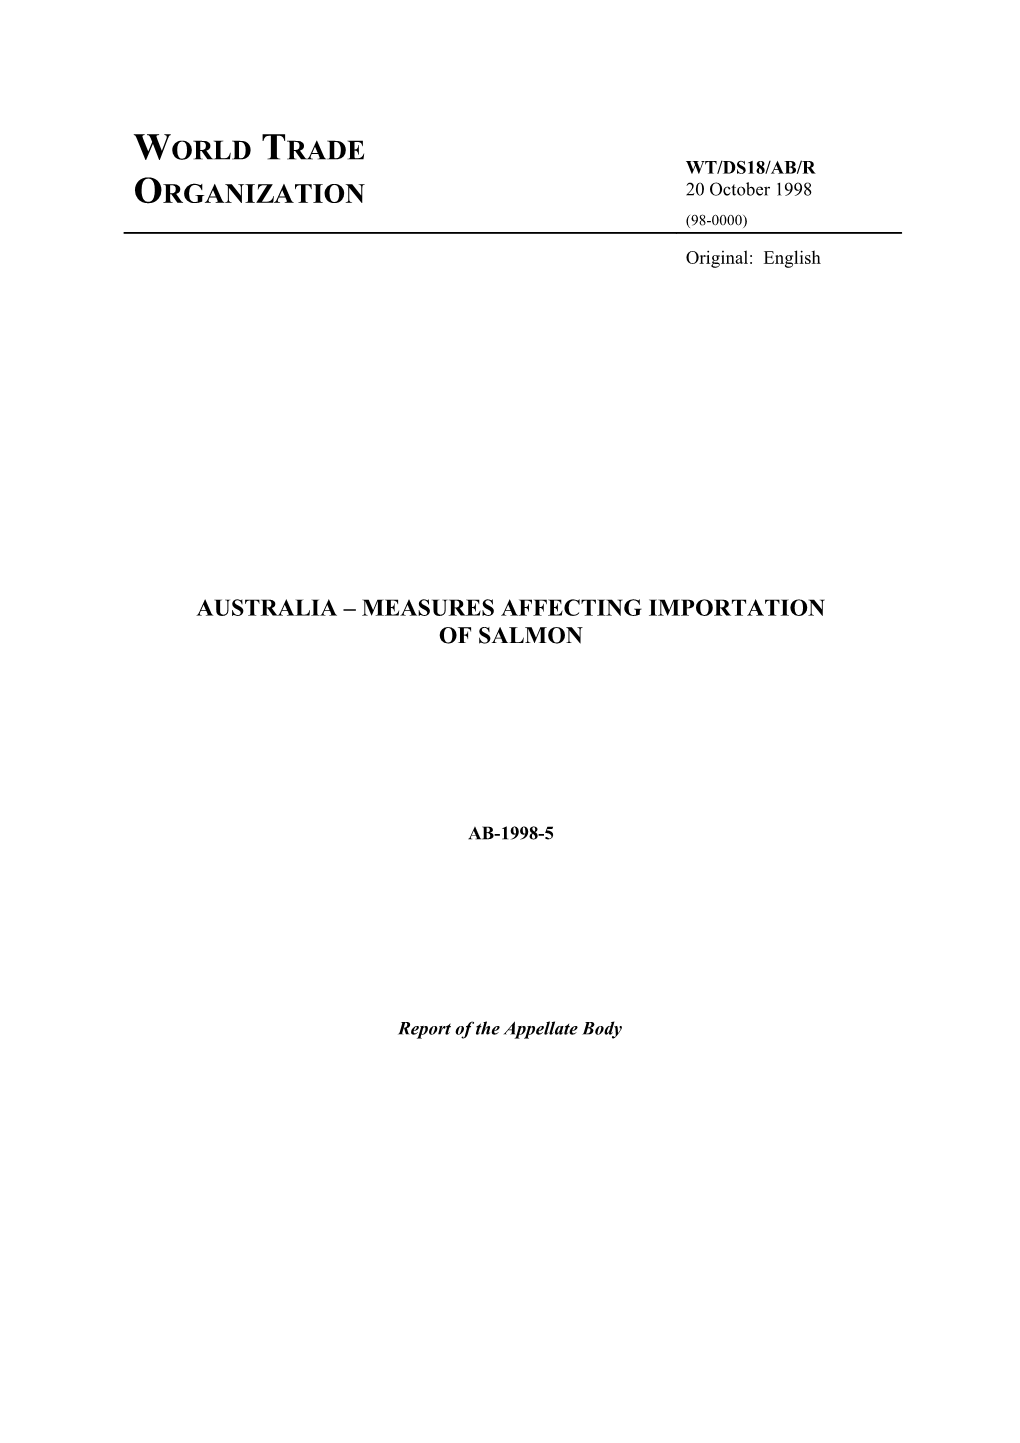 Australia Measures Affectingimportation